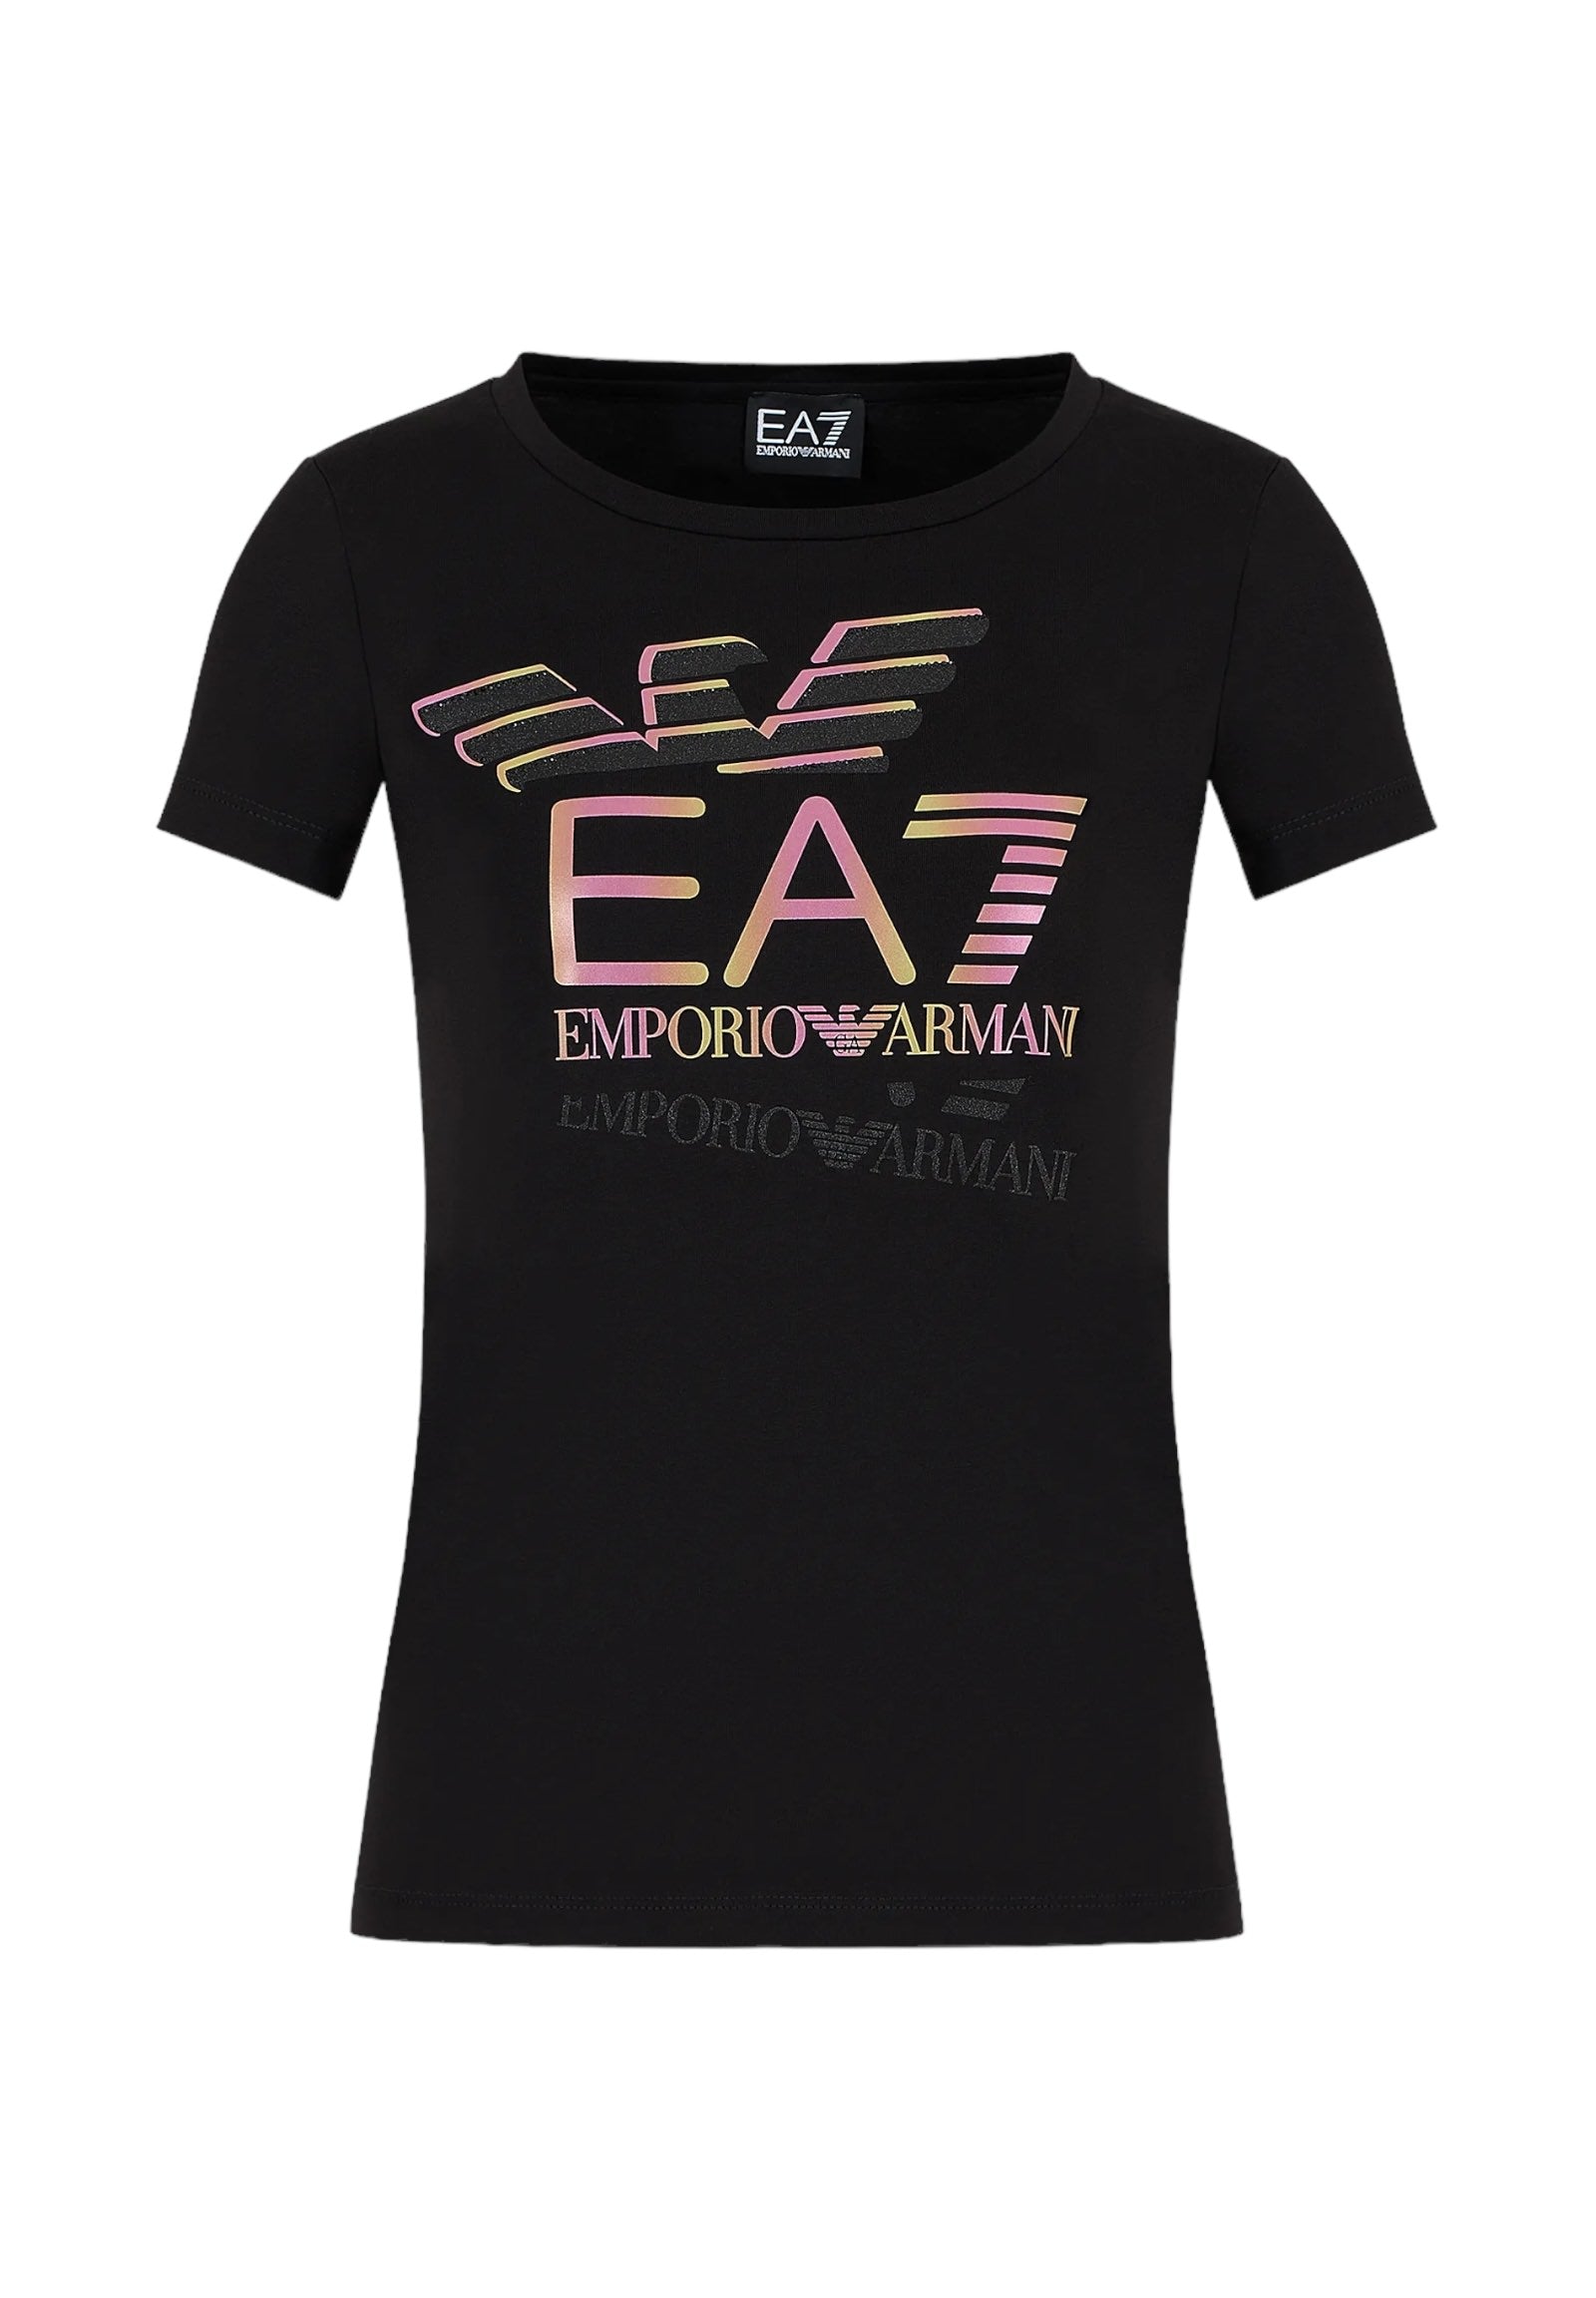 Ea7 Emporio Armani T-Shirt 3dtt30 Black